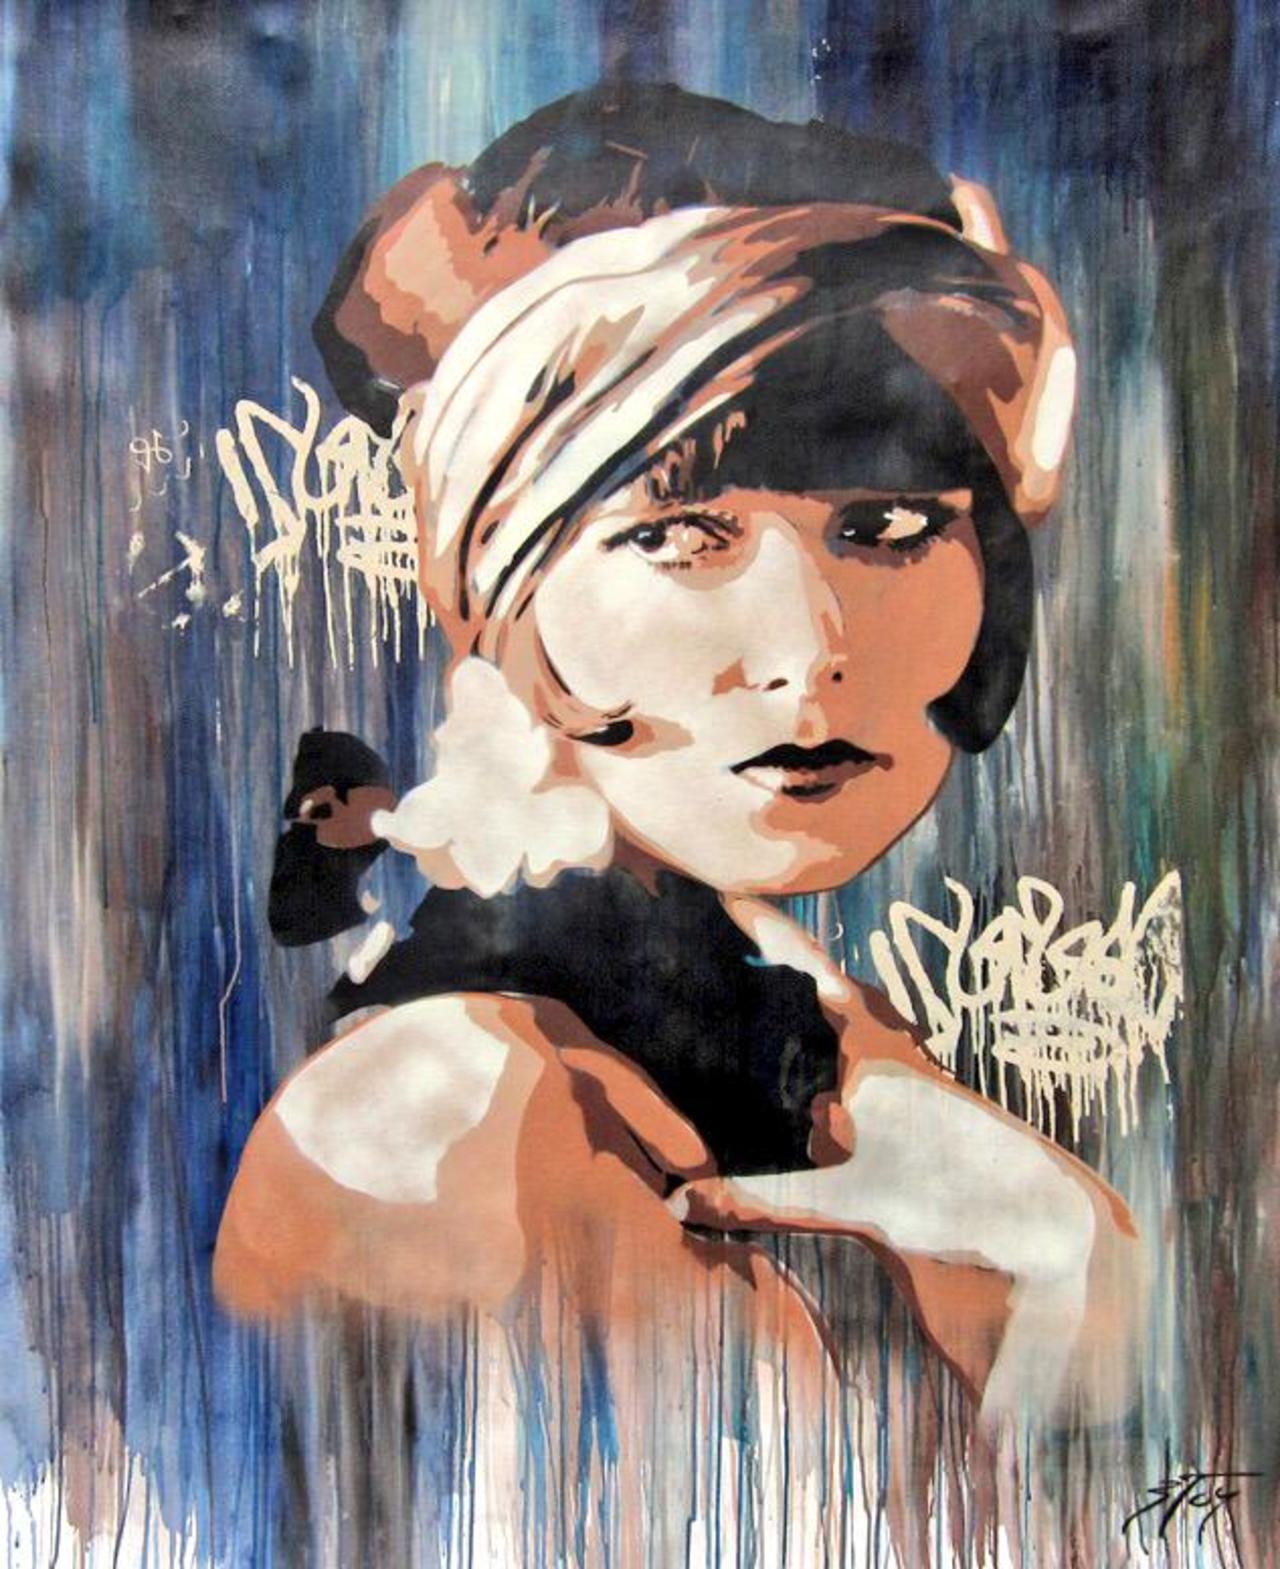 andrea michaelsson aka Btoy
#stencil #graffiti #art #urbanart http://t.co/pNriqbrOgn